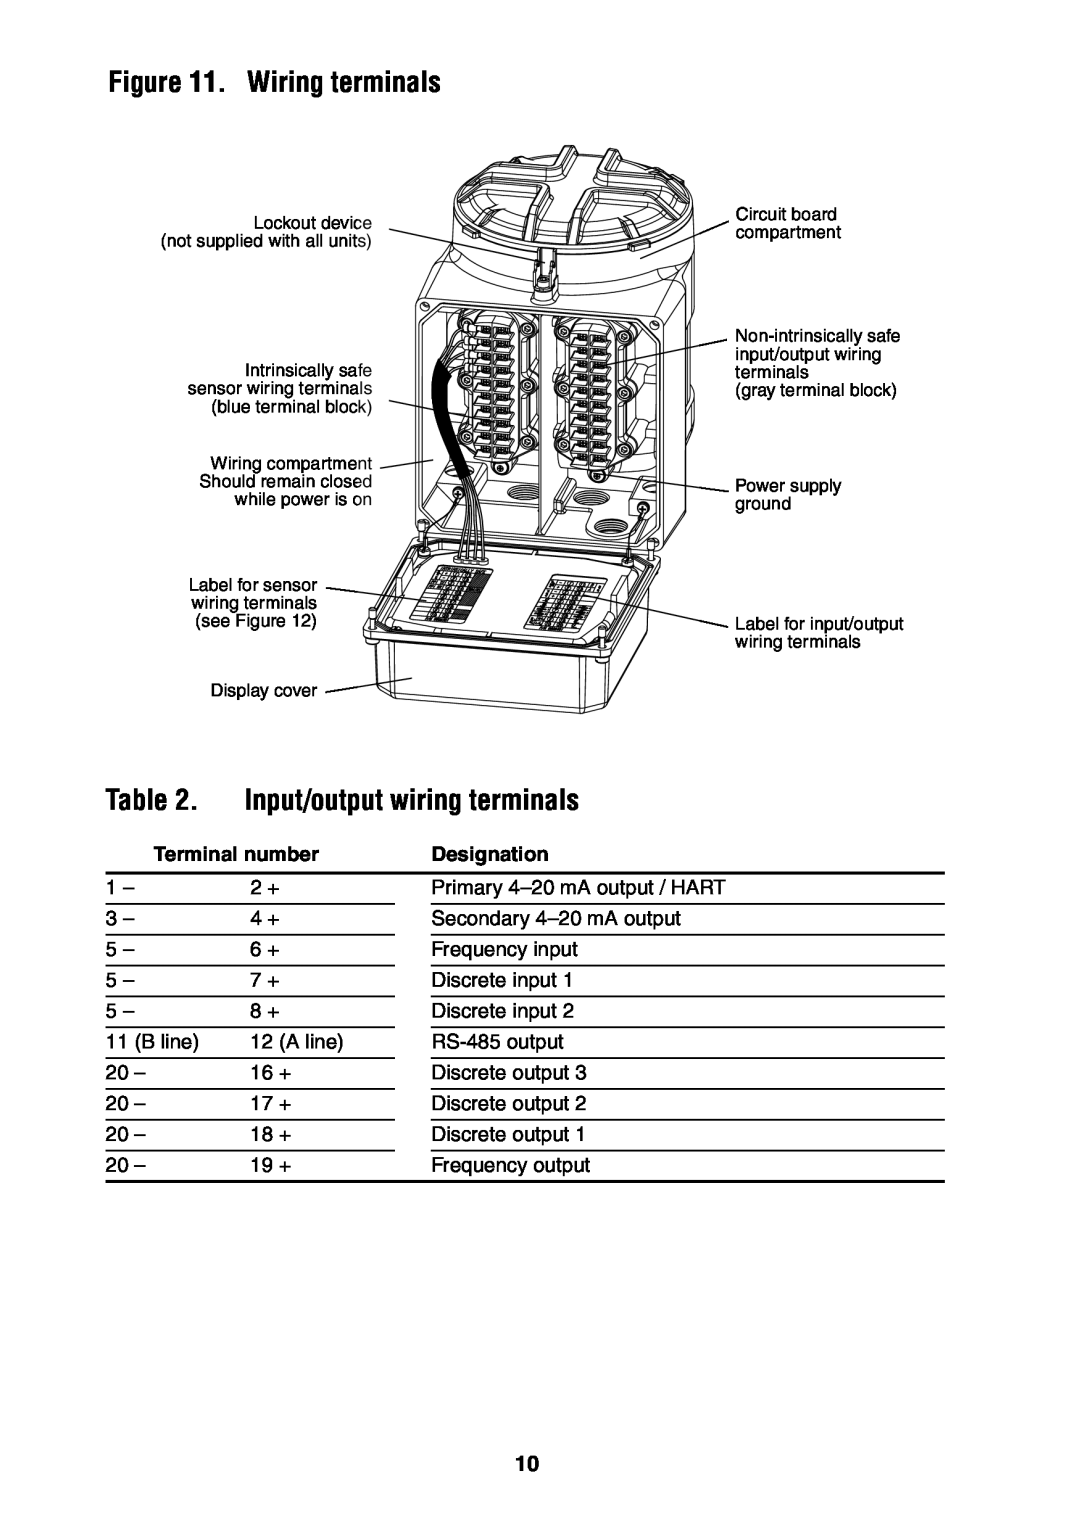 Emerson 3350, 3700 installation instructions Wiring terminals, Input/output wiring terminals, Terminal number, Designation 